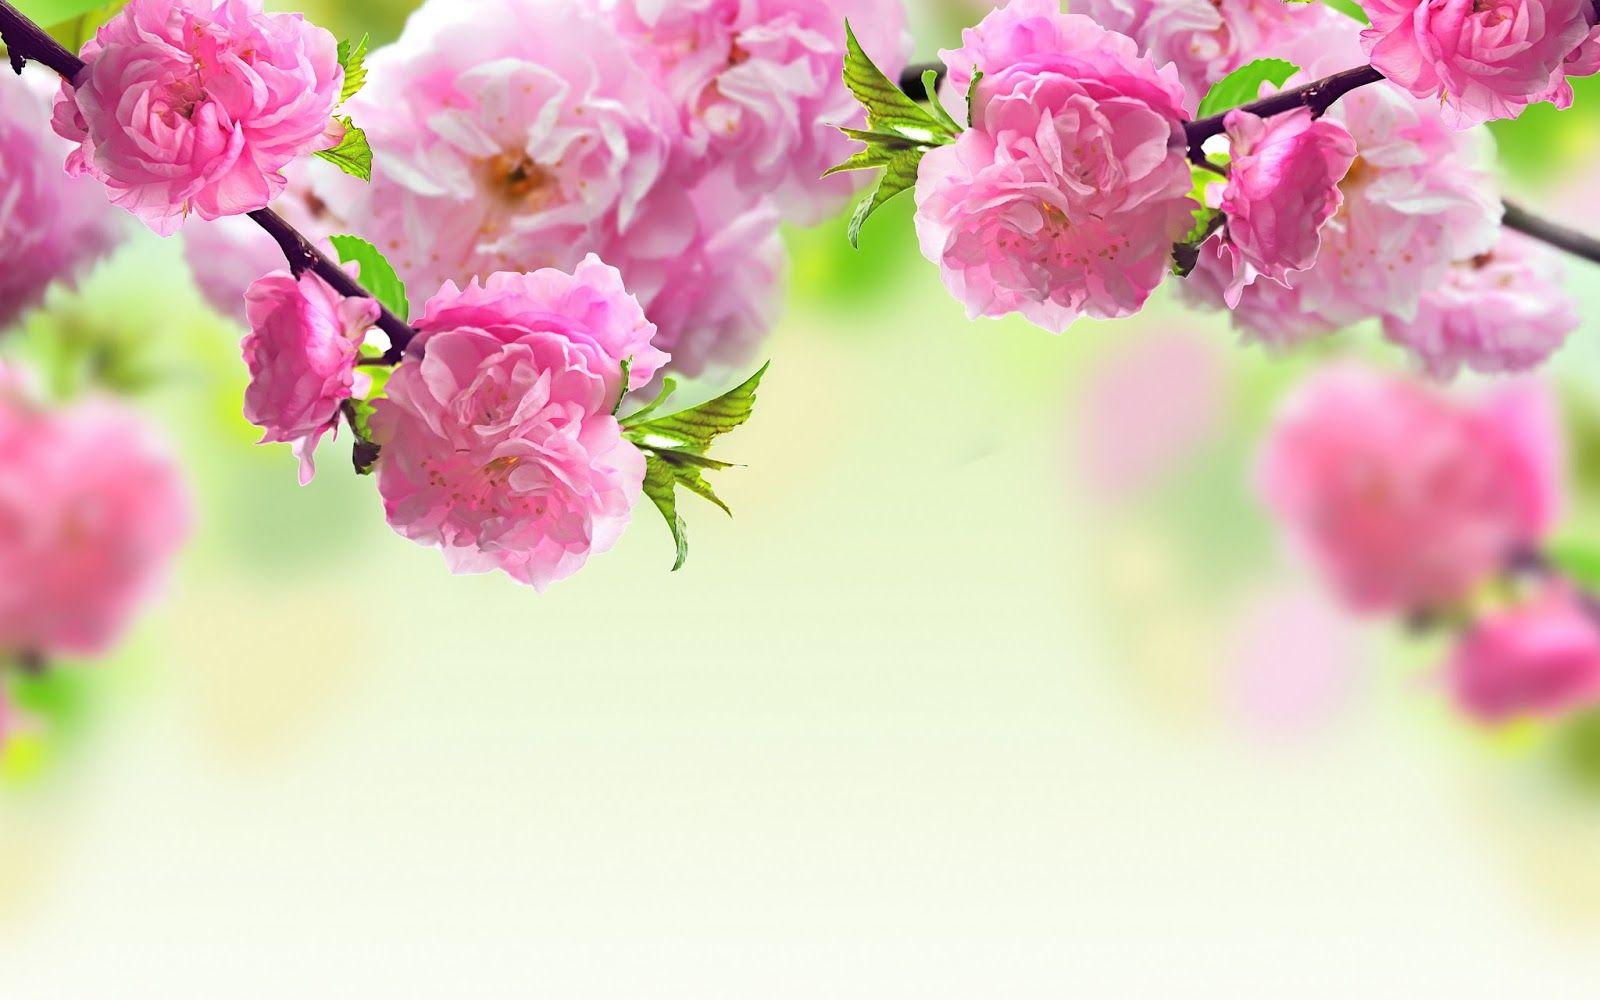 flowers wallpapers hd for desktop free download full screen